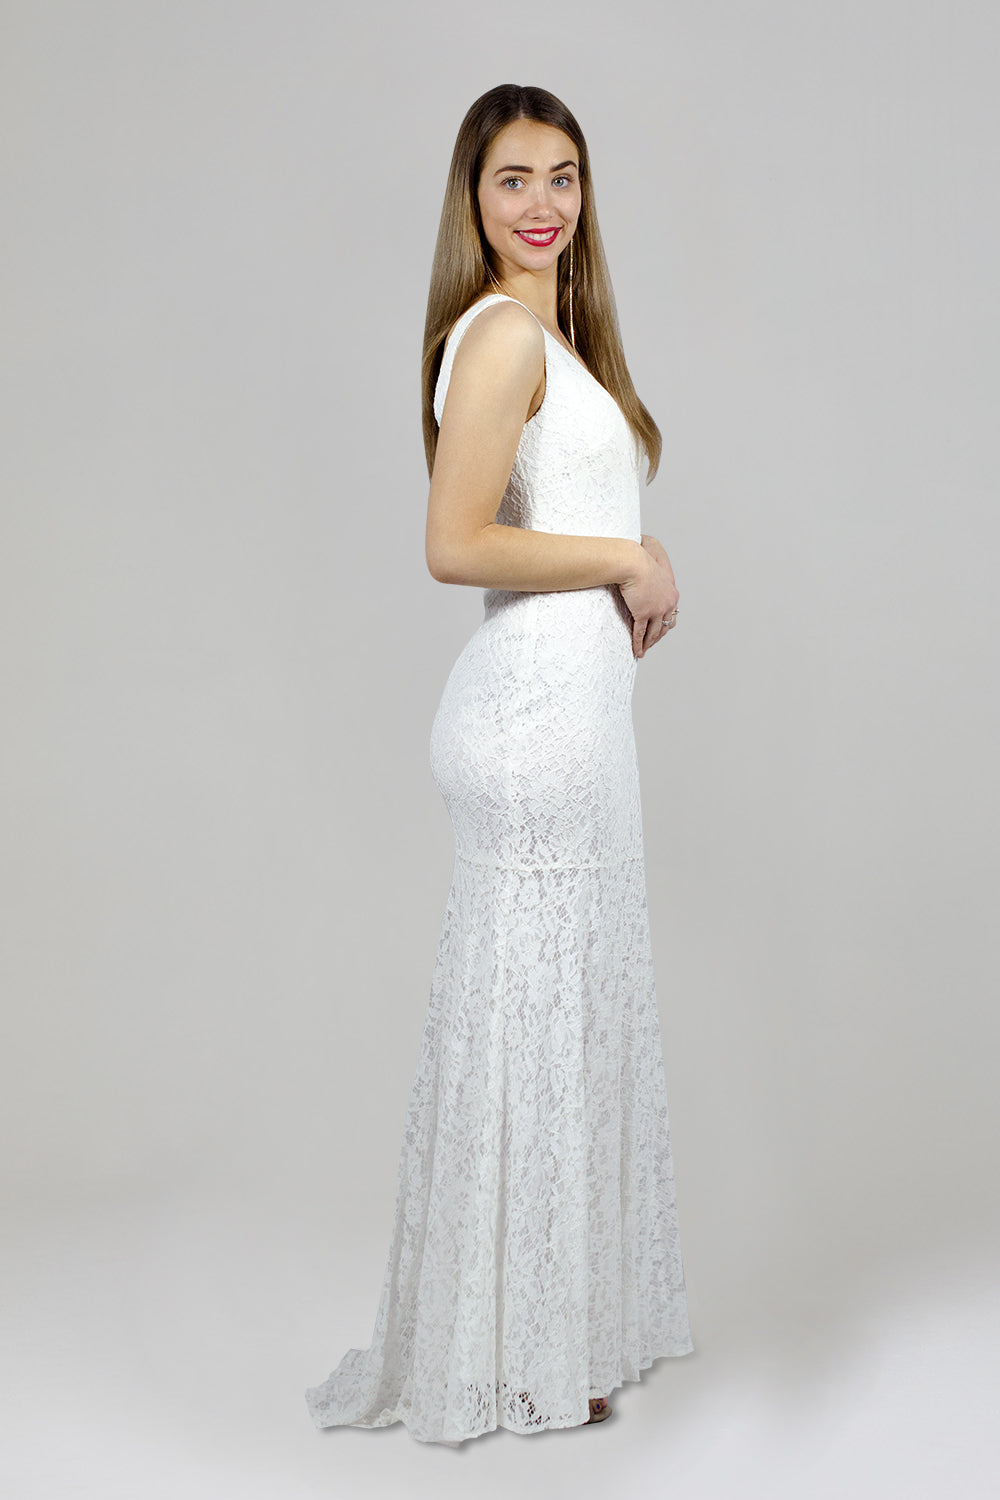 lace white formal bridesmaid gowns australia online envious bridal & formal